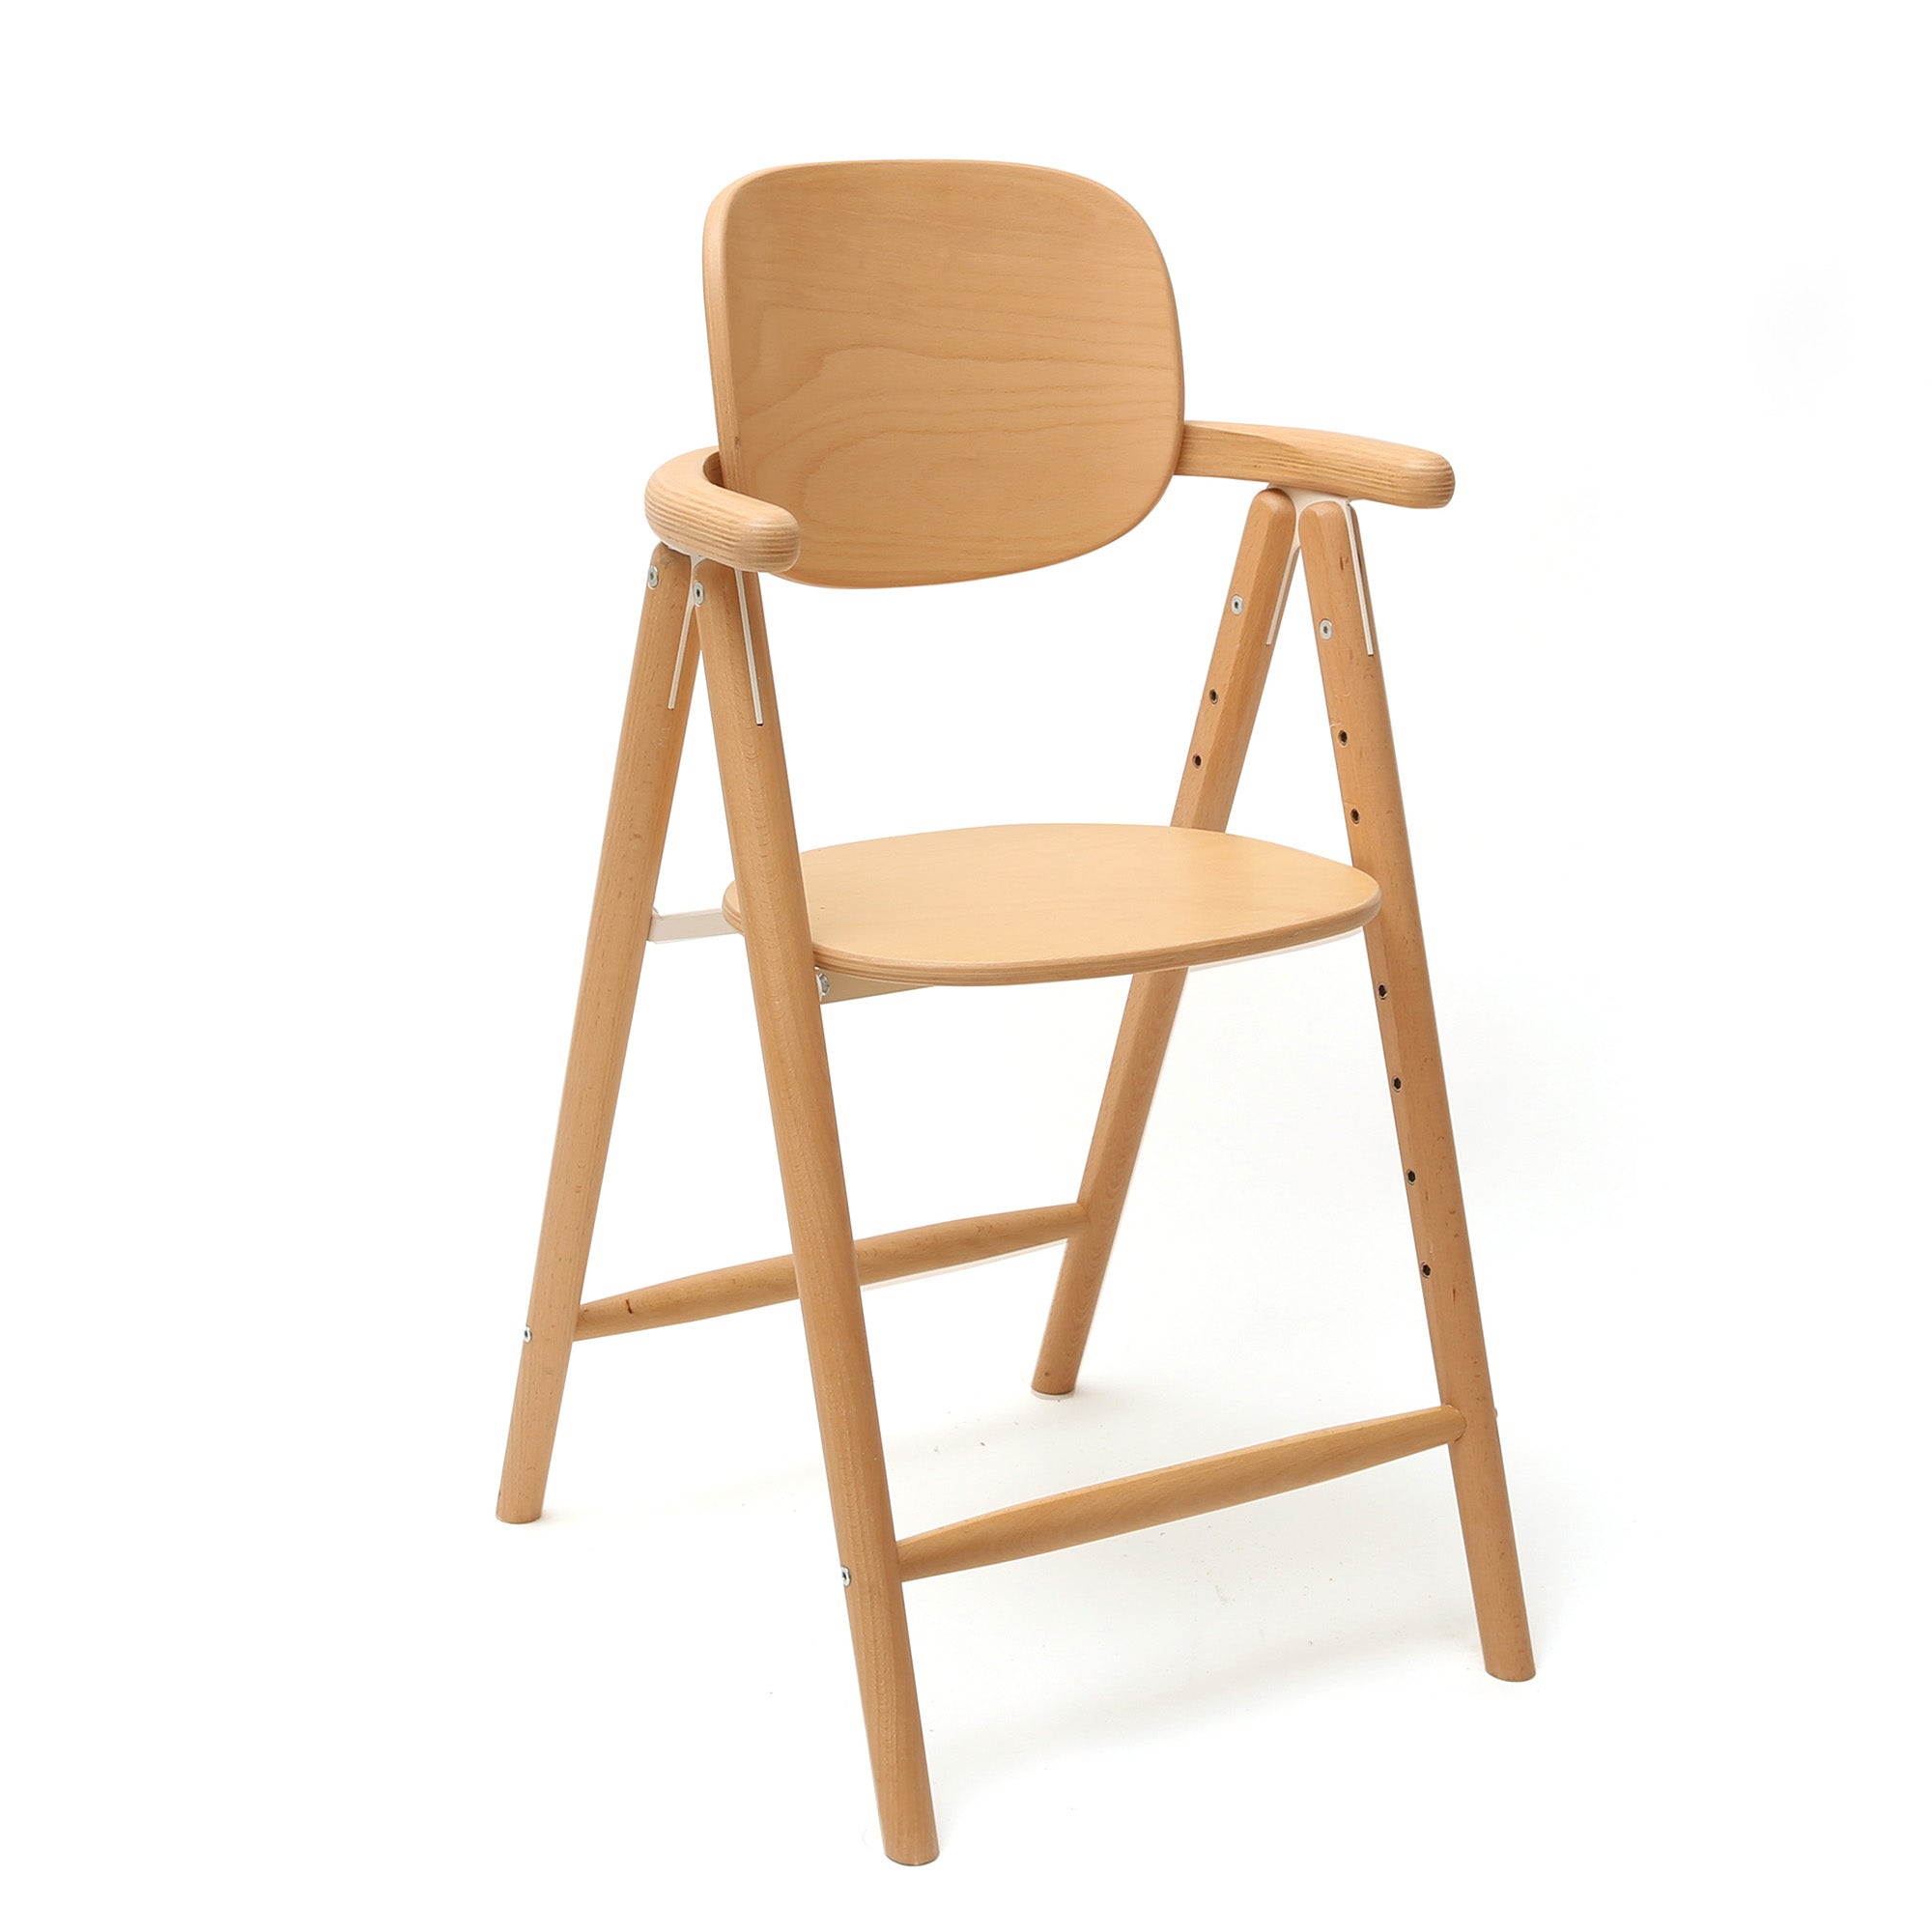 TOBO Evolutionary Chair Tray